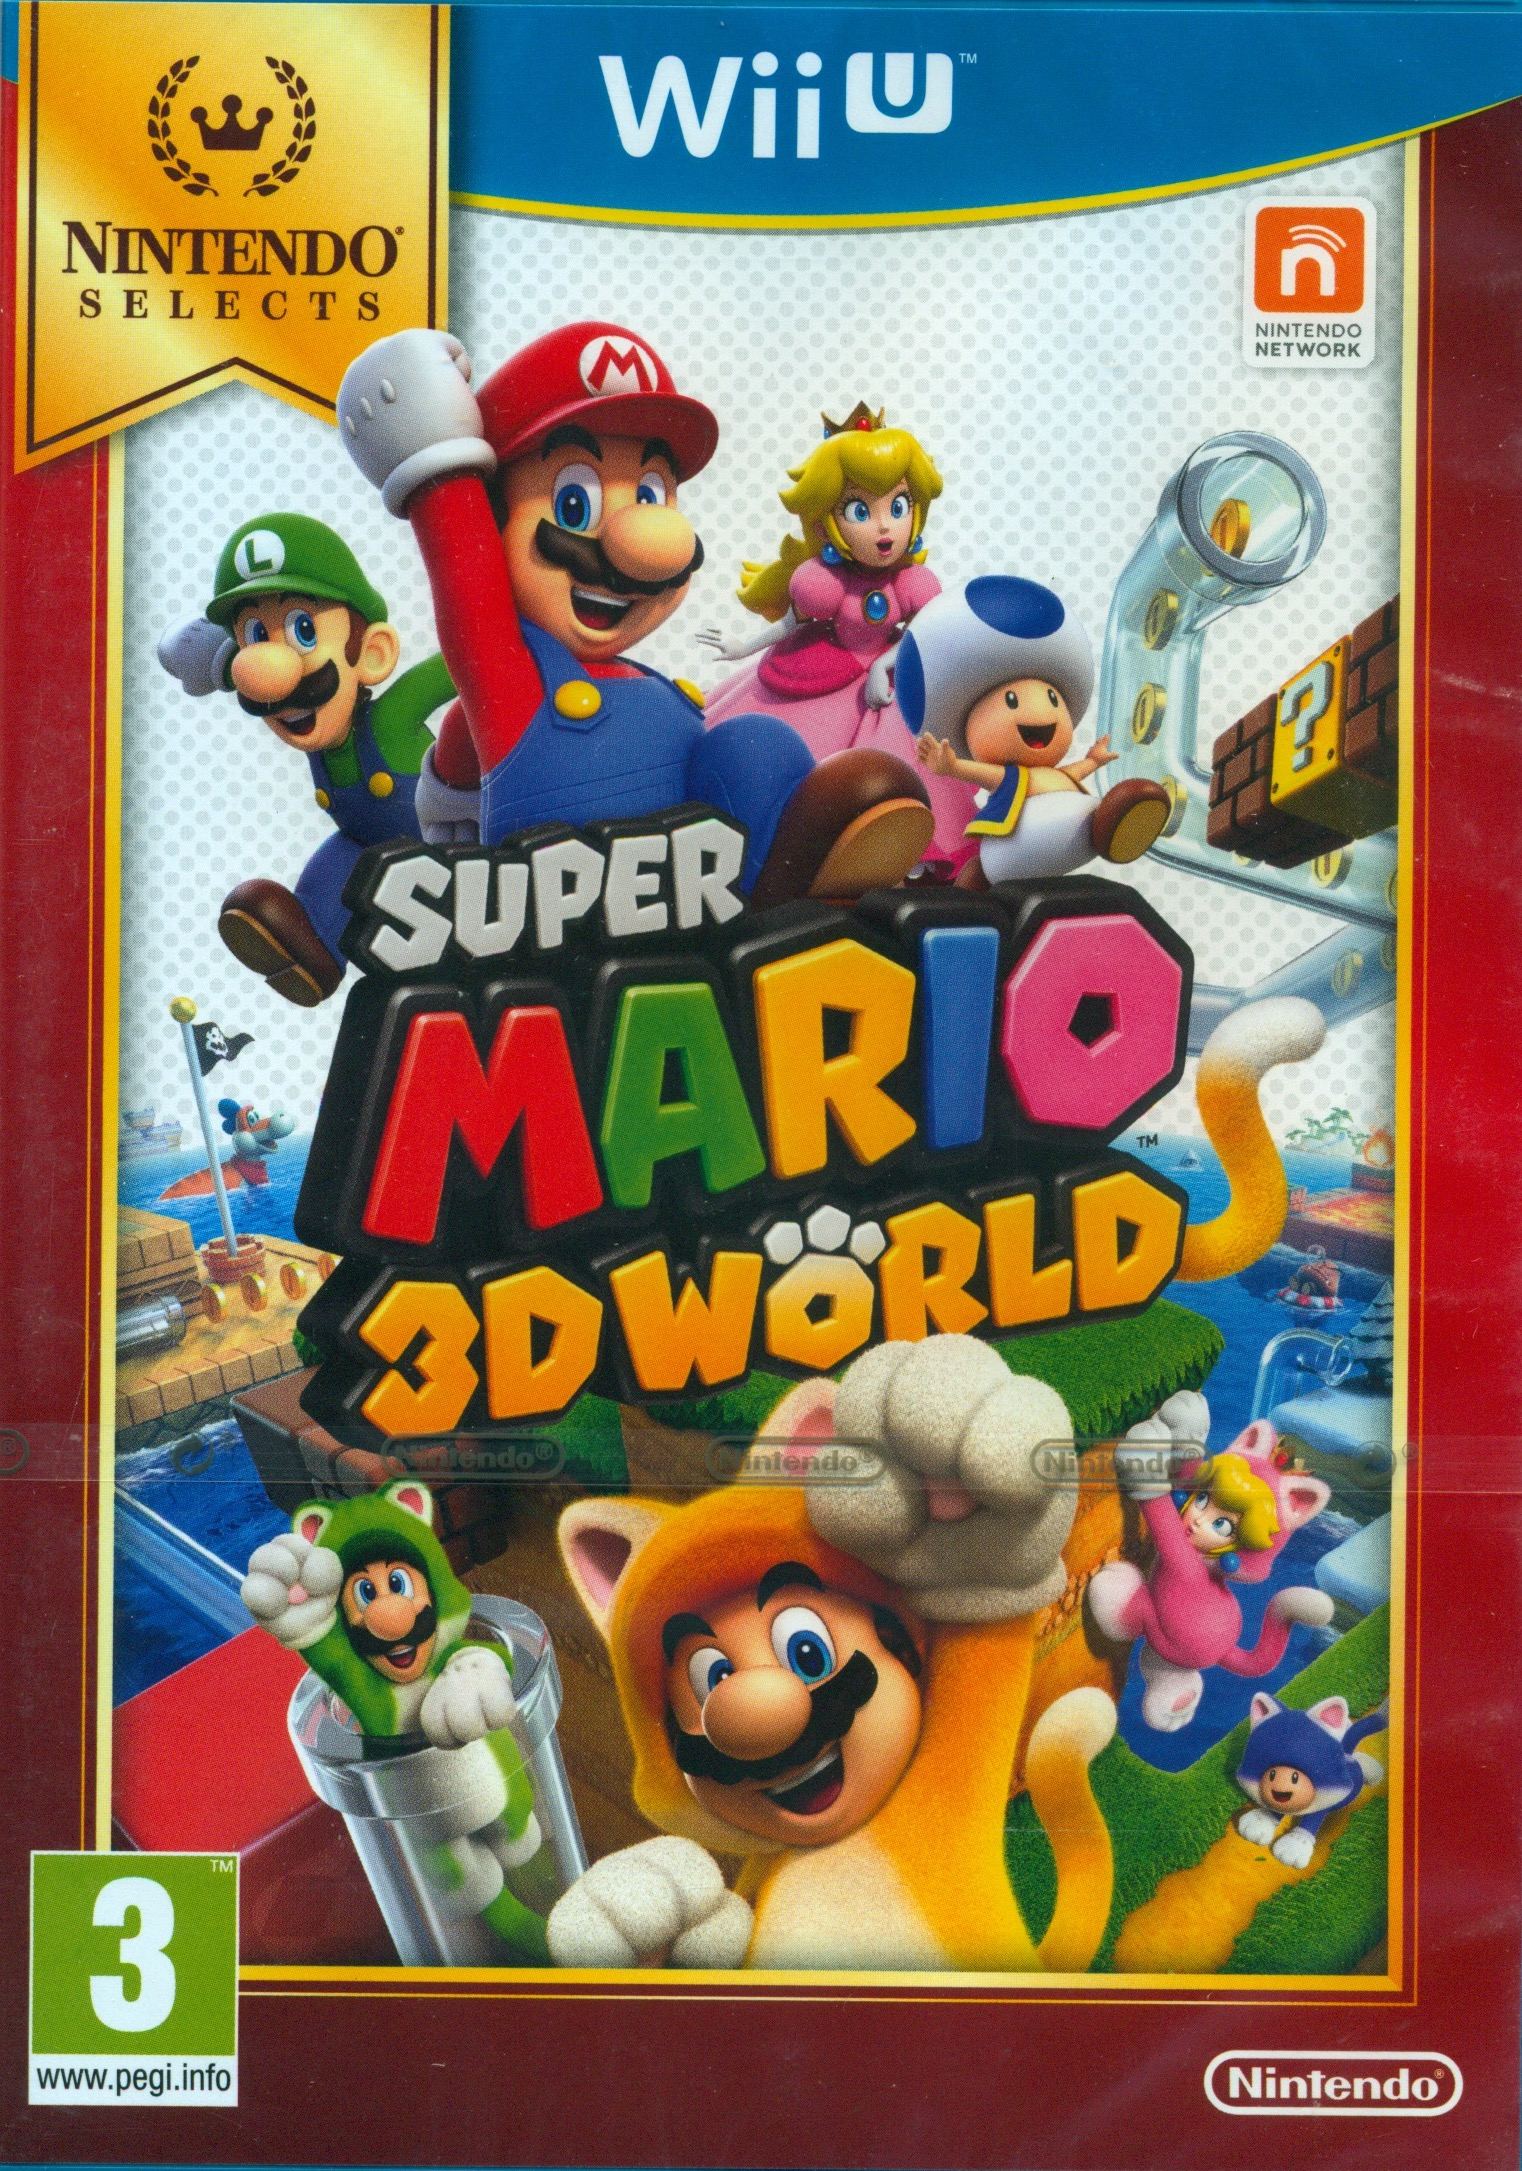 Nintendo Selects: Super Mario 3D World Game (Nintendo Wii U, 2013)